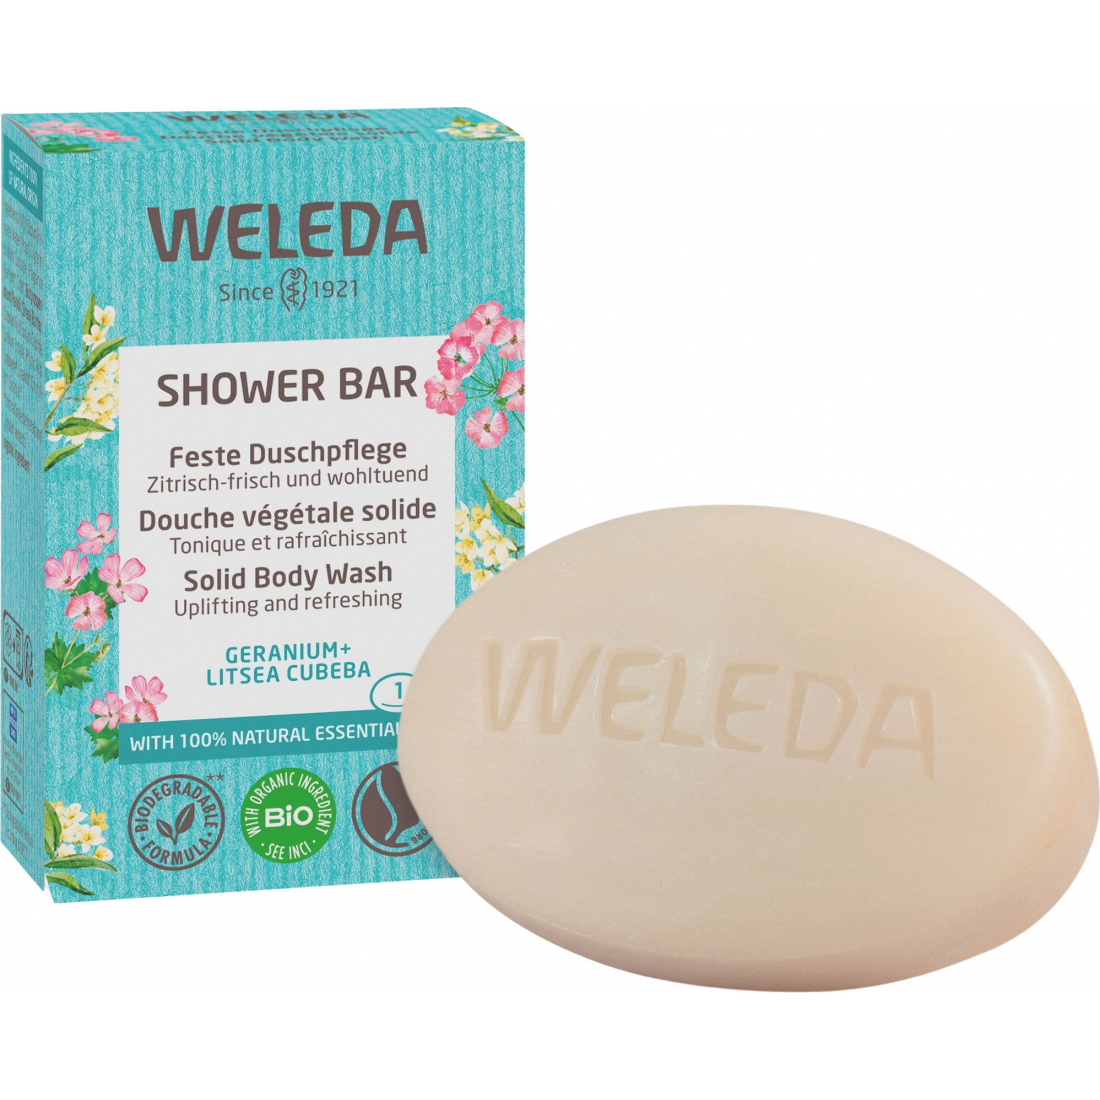 'Geranium+Litsea Cubeba' Bar Soap - 75 g